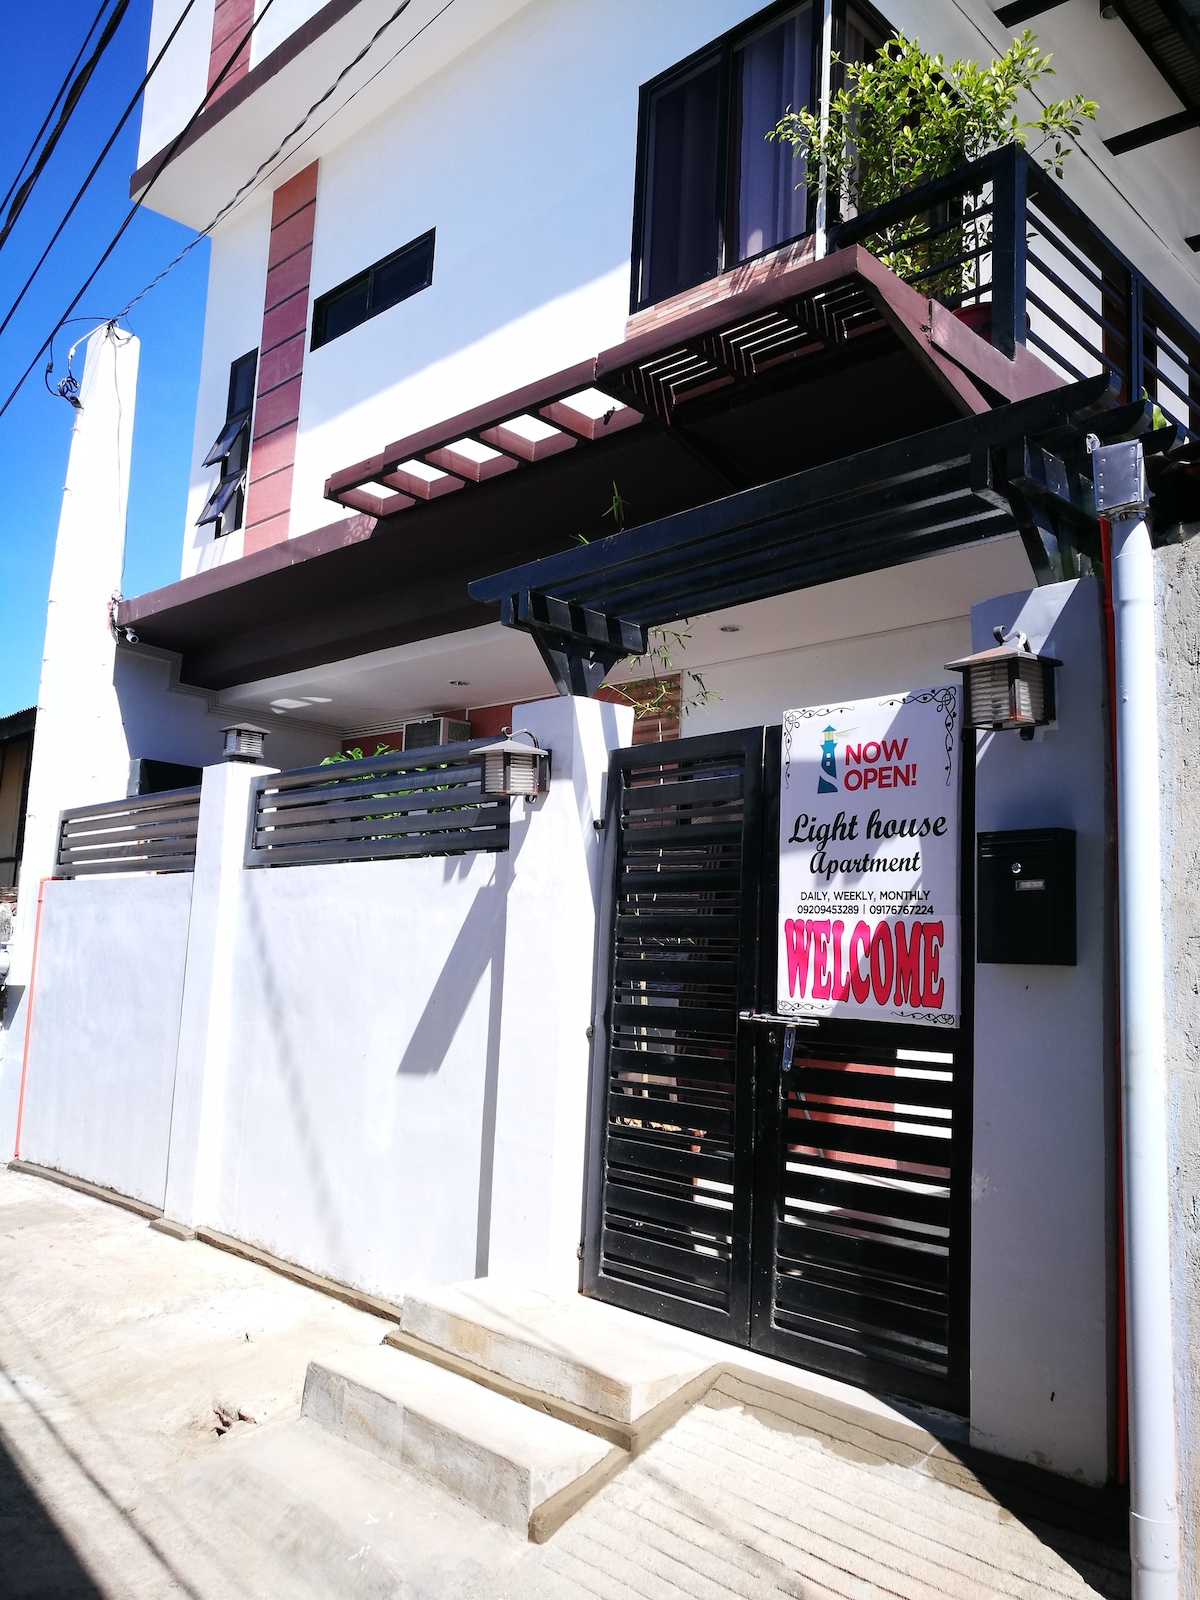 Lovely 1-bedroom Rental Unit in Puerto Princesa